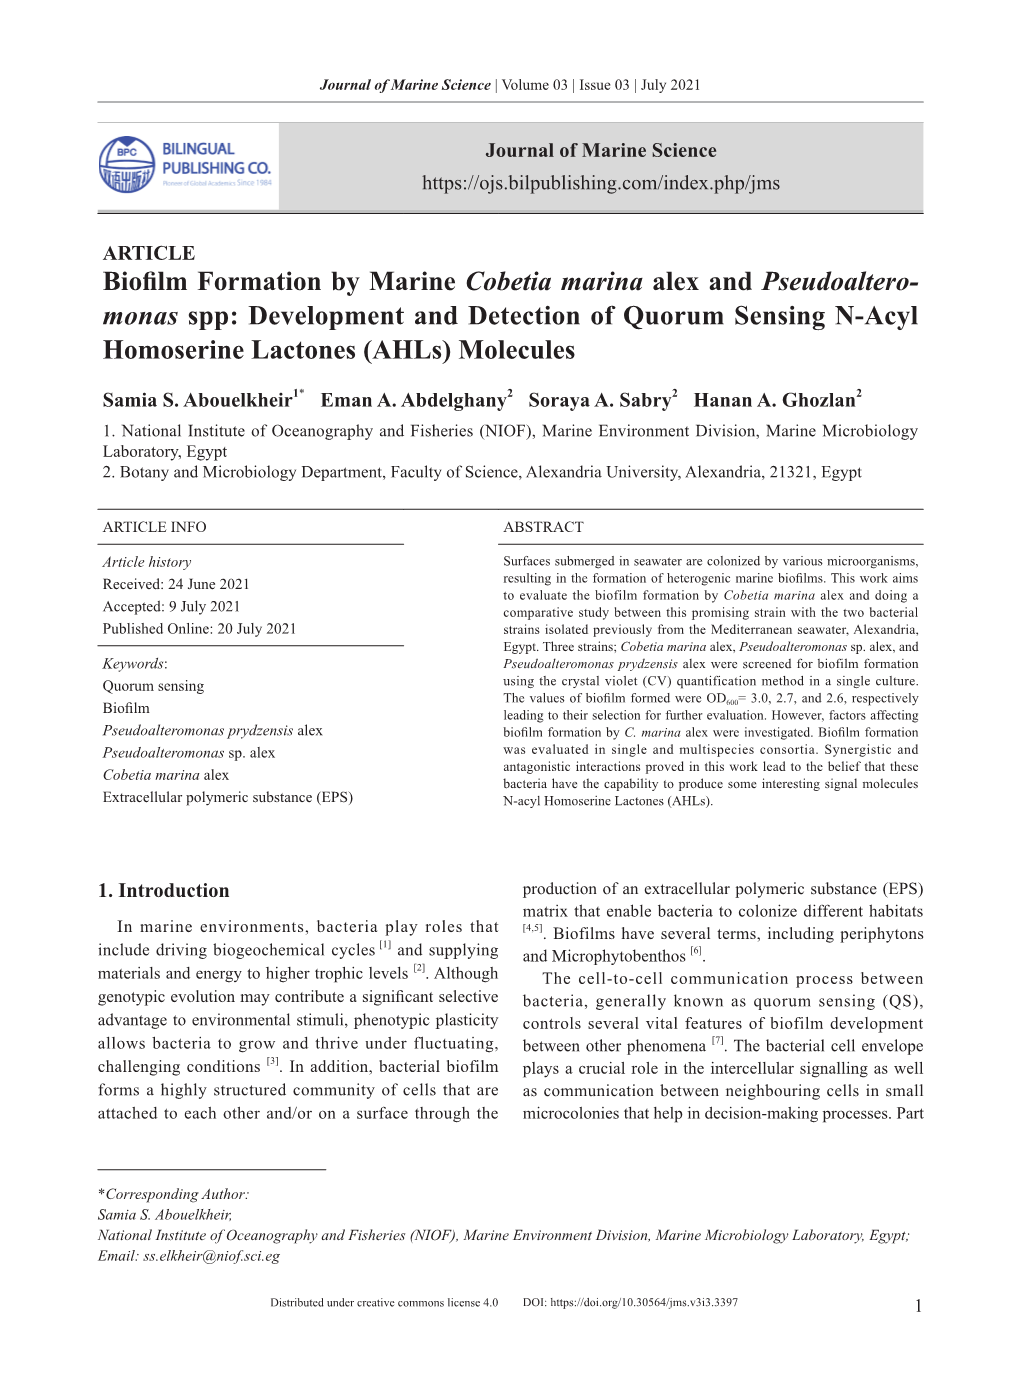 Biofilm Formation by Marine Cobetia Marina Alex and Pseudoaltero- Monas Spp: Development and Detection of Quorum Sensing N-Acyl Homoserine Lactones (Ahls) Molecules